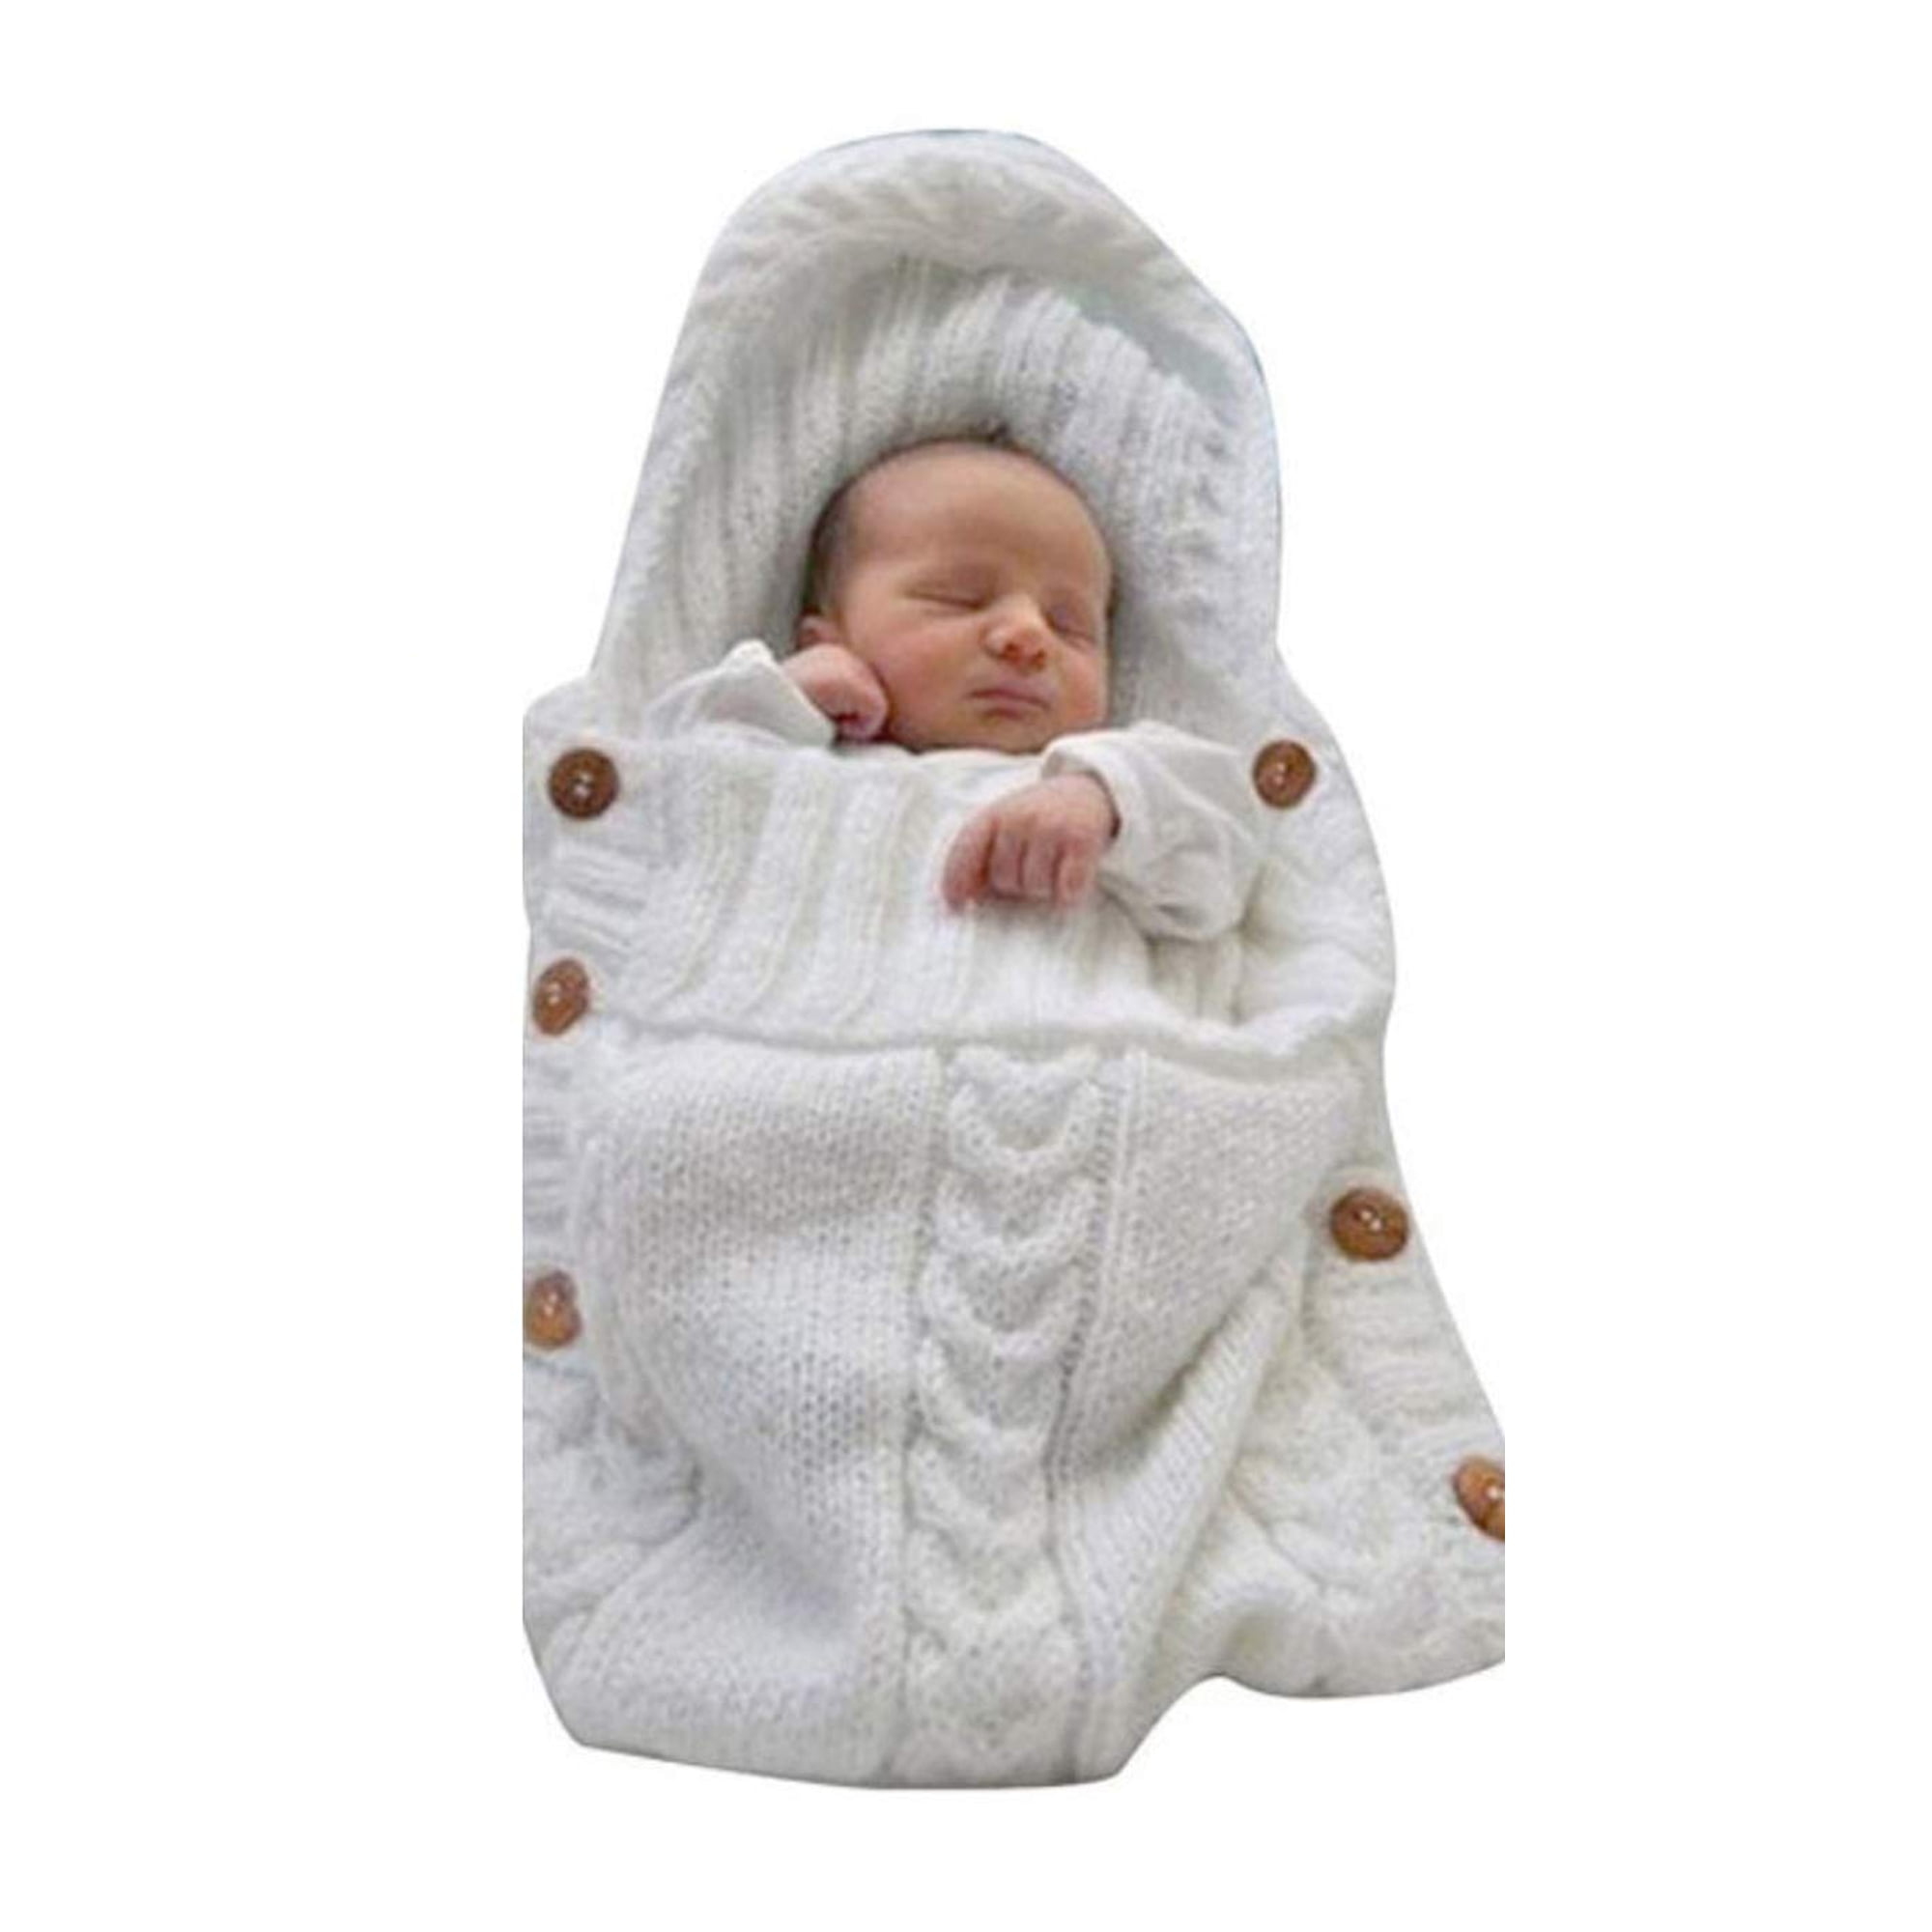 Newborn Baby Soft Knit Wool Swaddle Wrap Infant Sleeping Bag Bedding Blanket NEW